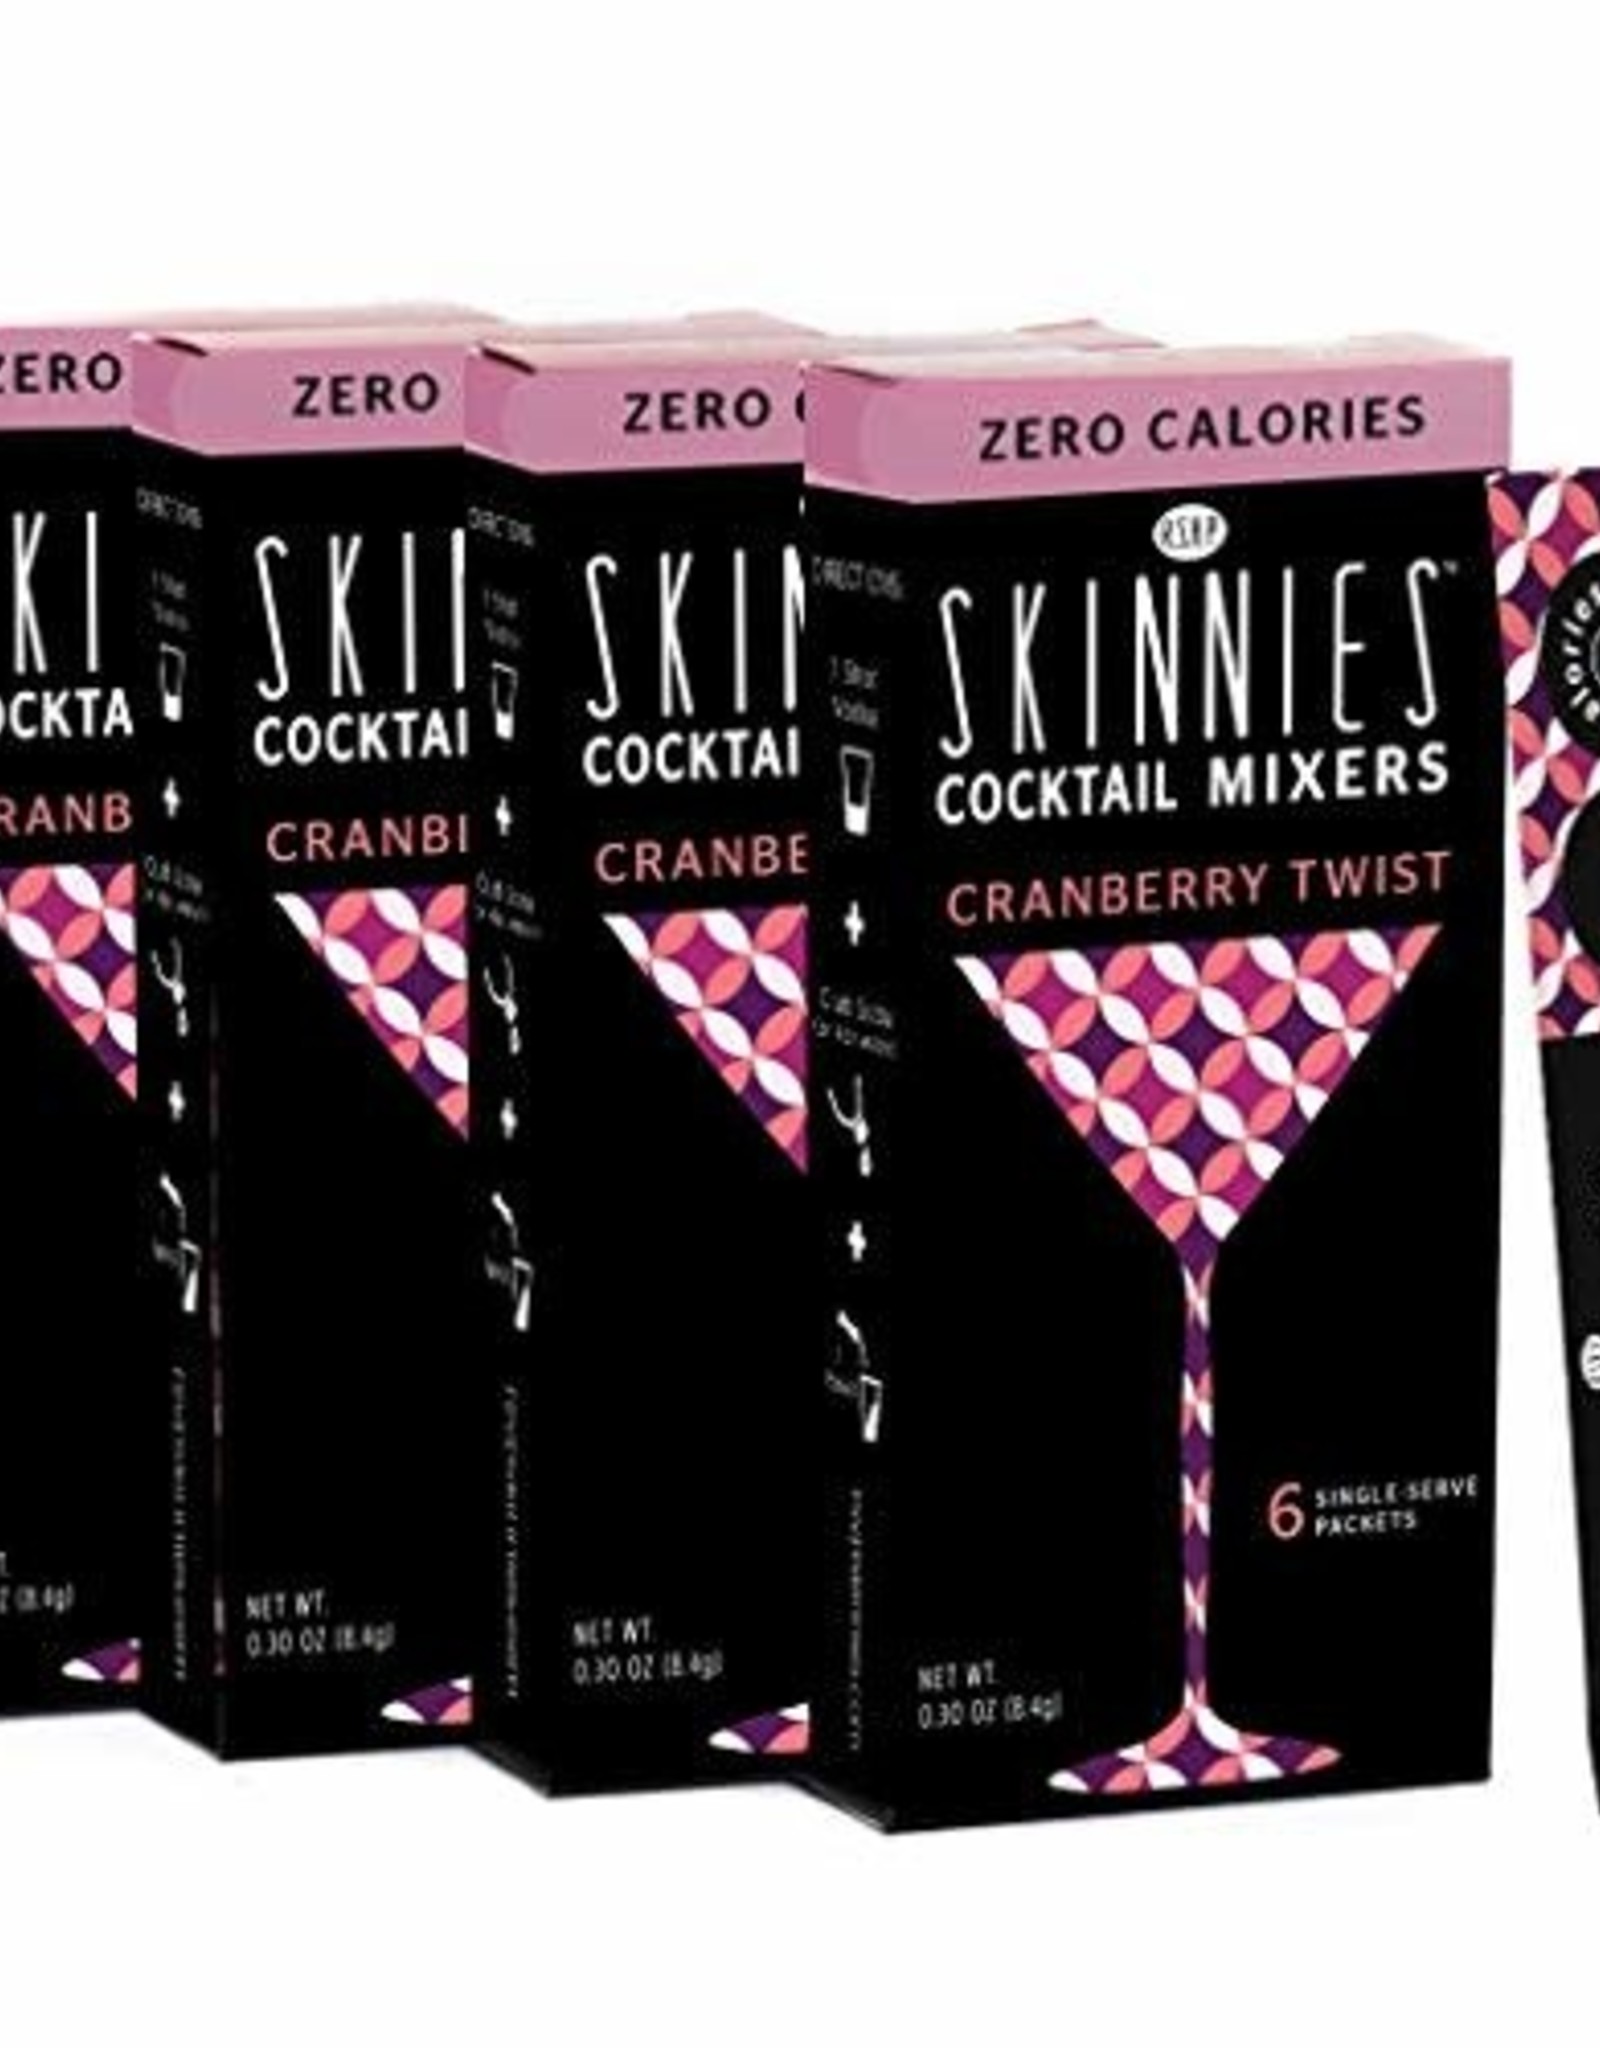 Skinnies Mixers Cran Twist 6pk